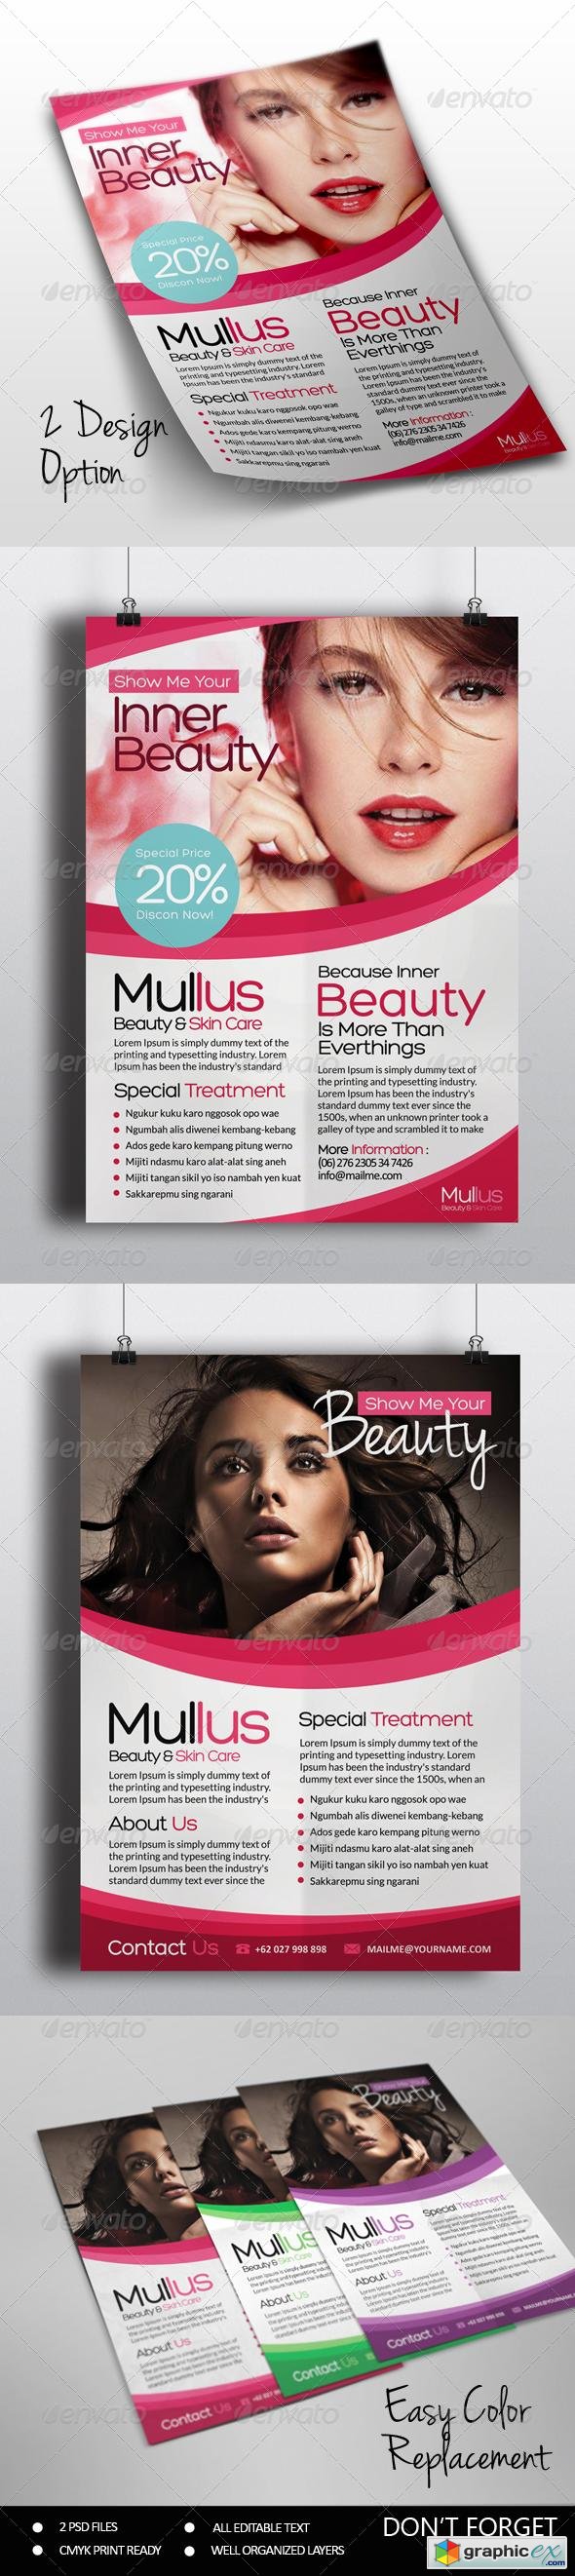 Beauty Care Flyer